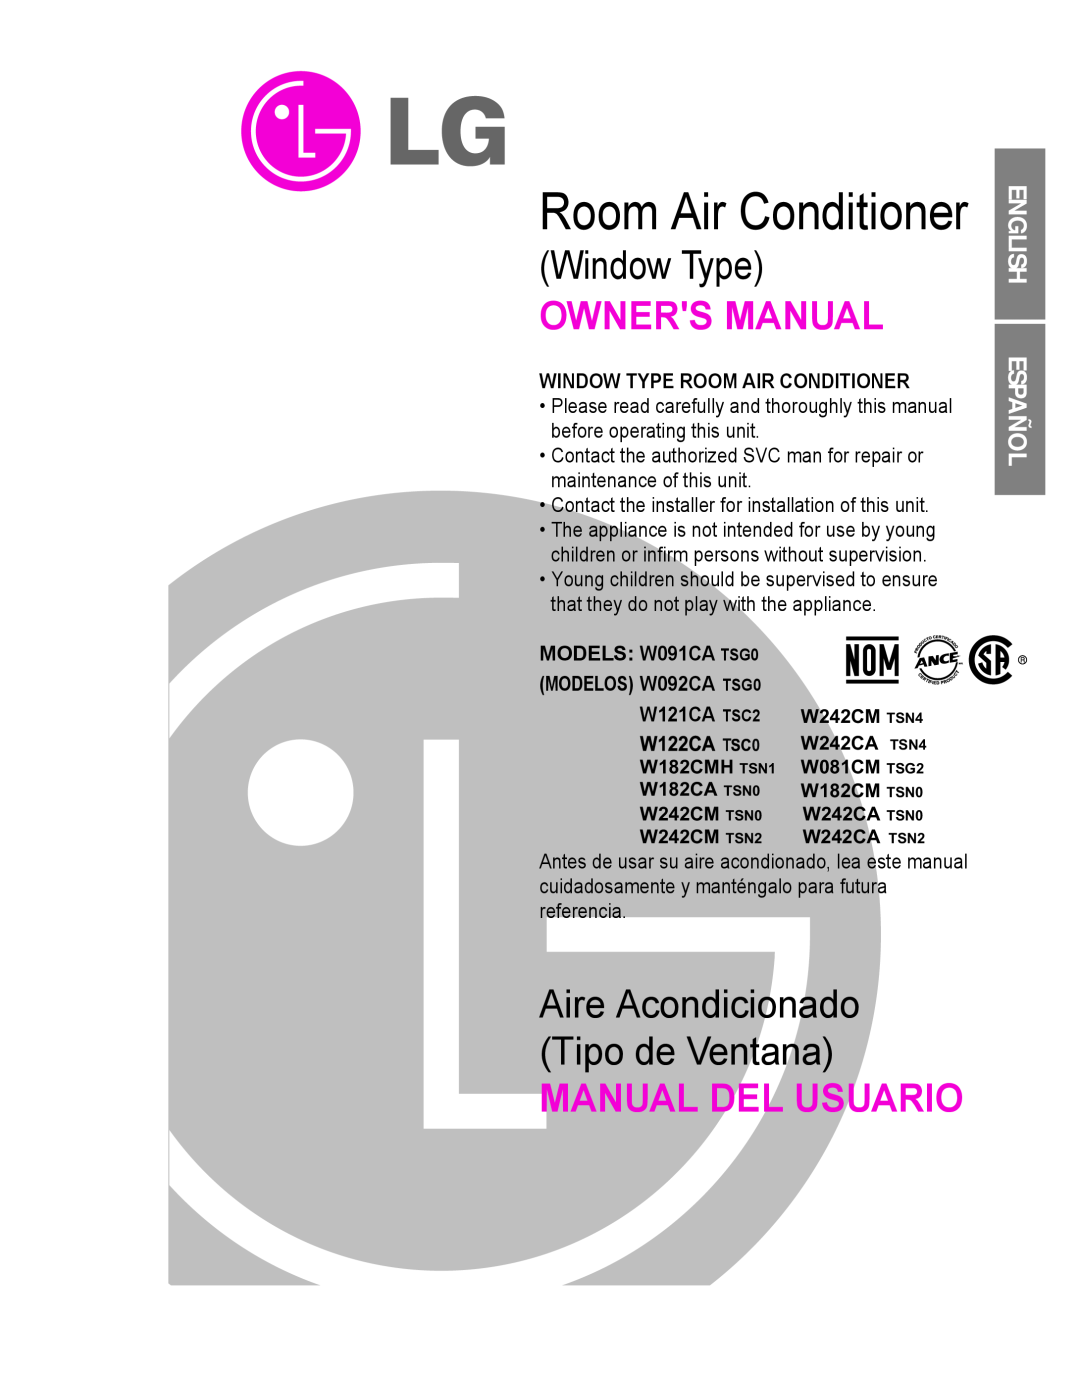 Minolta W091CA TSG0 owner manual English Español, Room Air Conditioner, Window Type, Manual Del Usuario, W121CA TSC2 